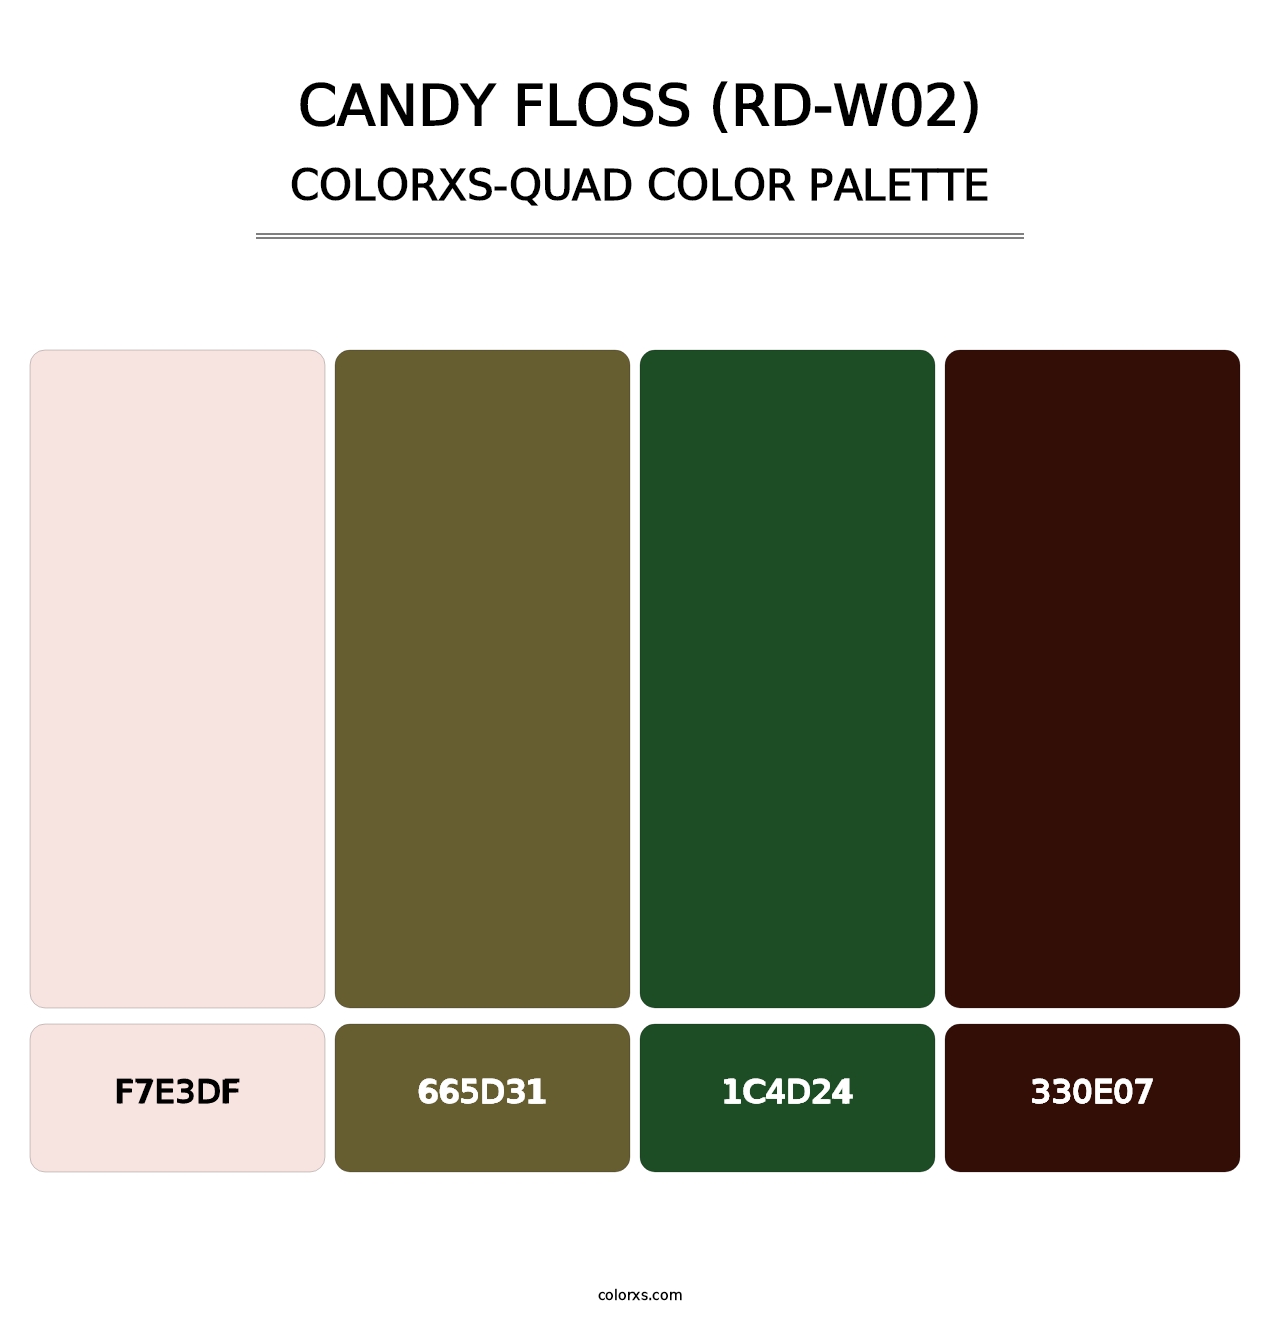 Candy Floss (RD-W02) - Colorxs Quad Palette